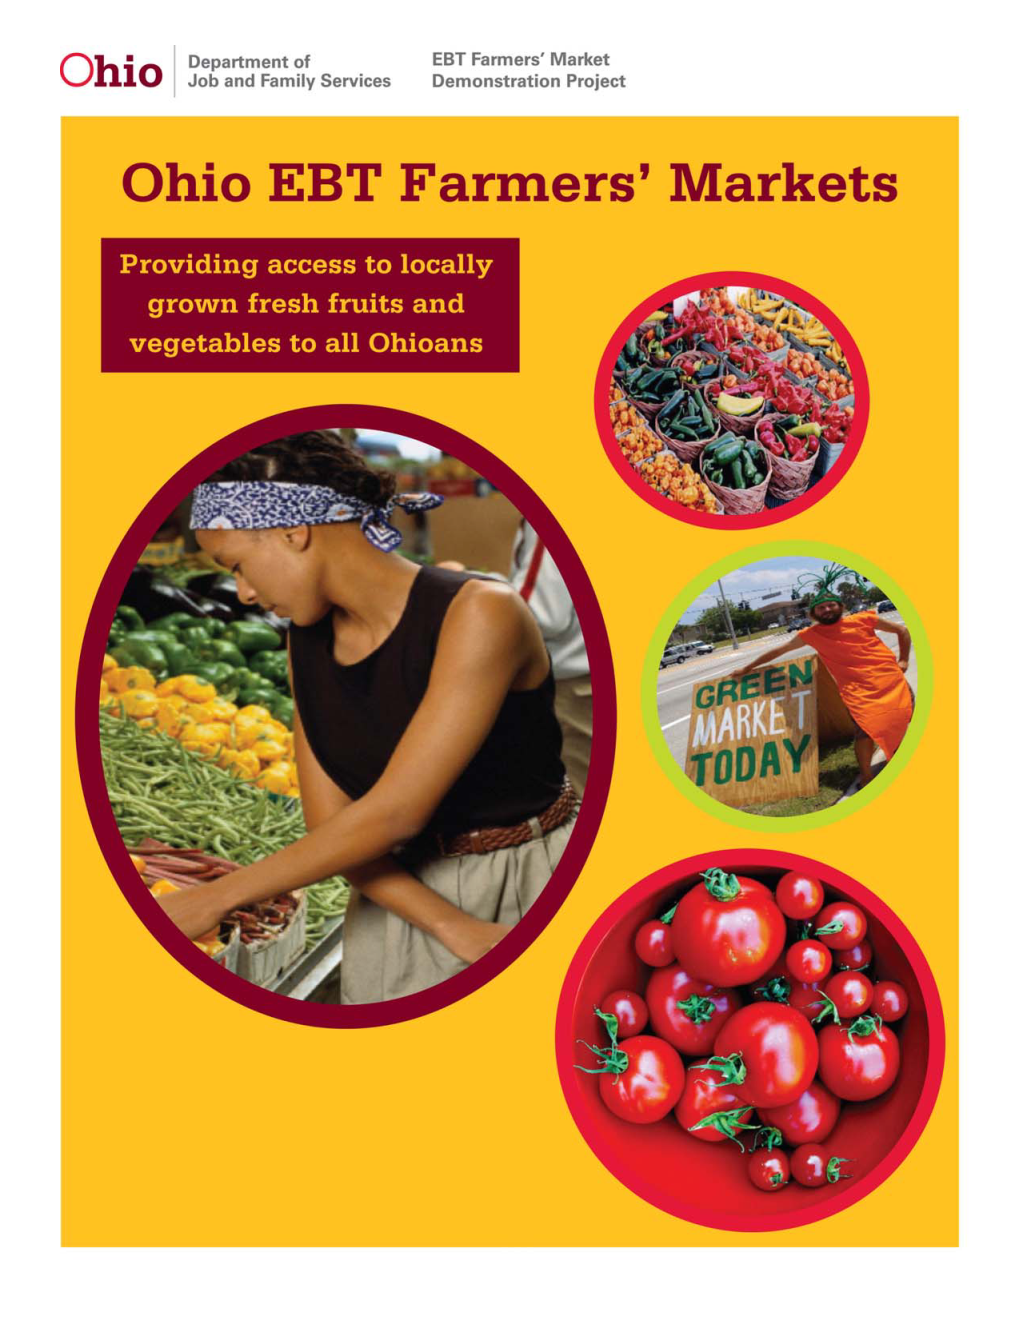 2010 Ohio EBT Farmers' Markets